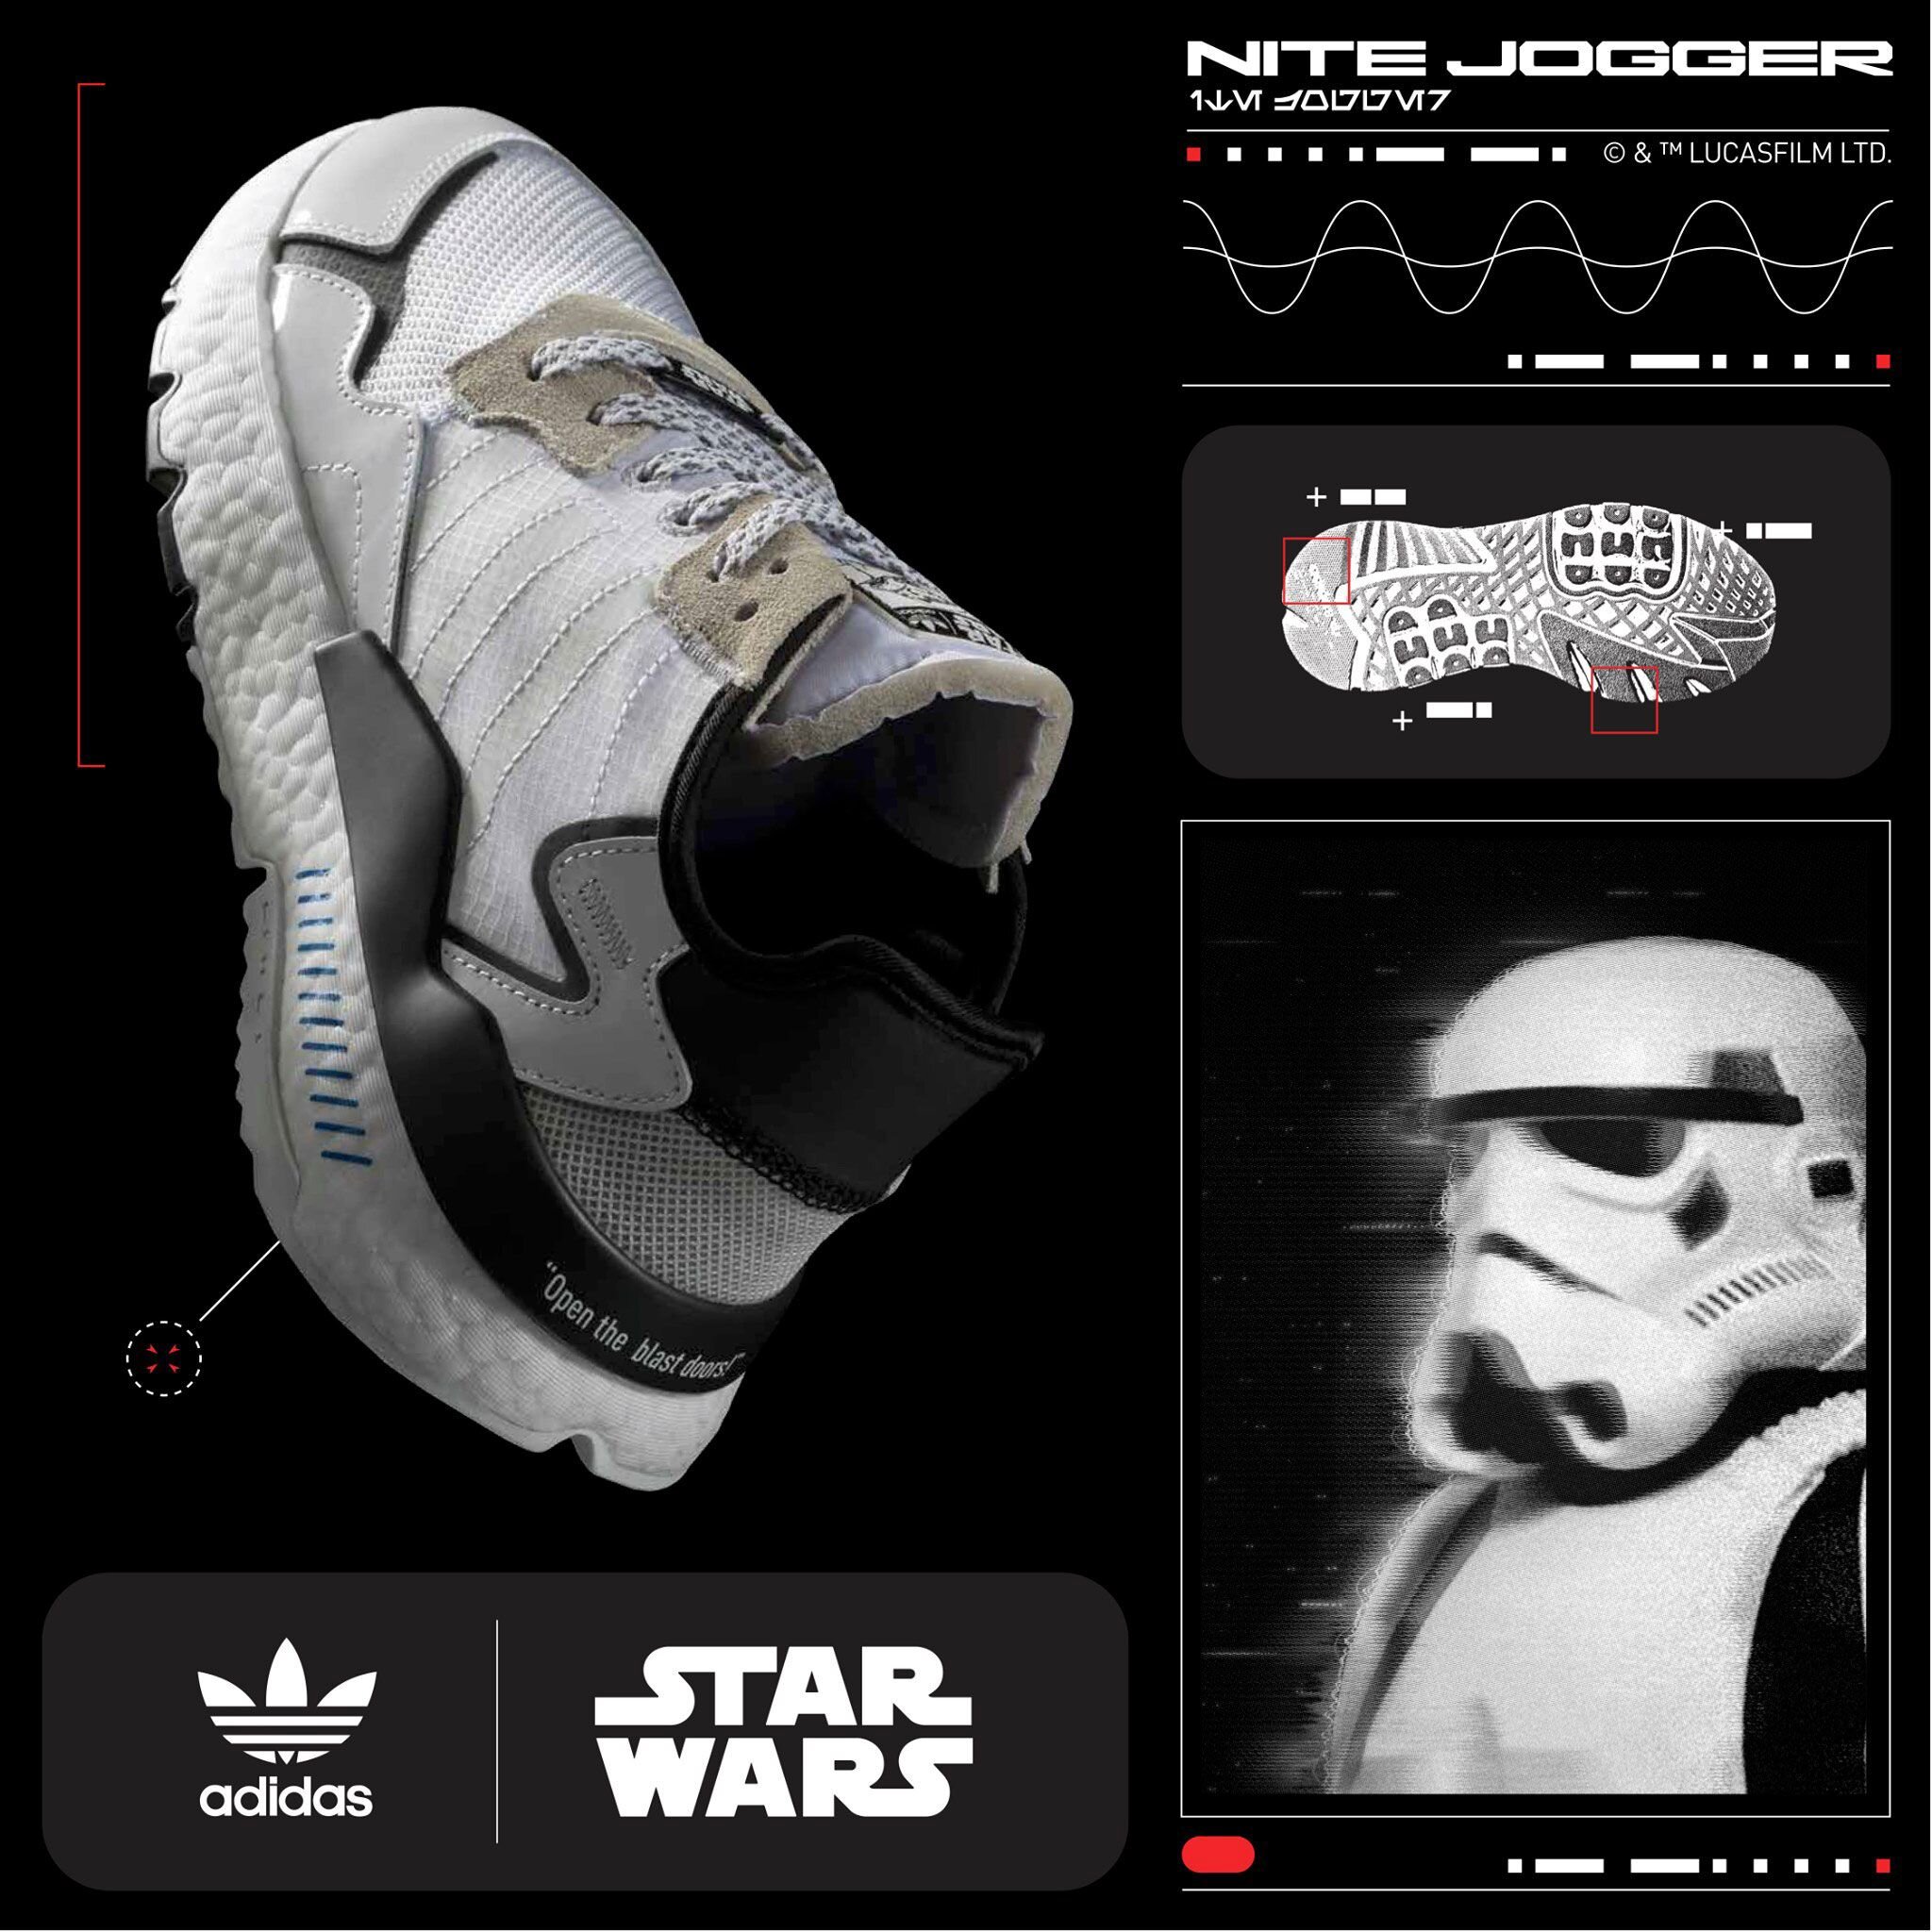 star wars x adidas nite jogger stormtrooper